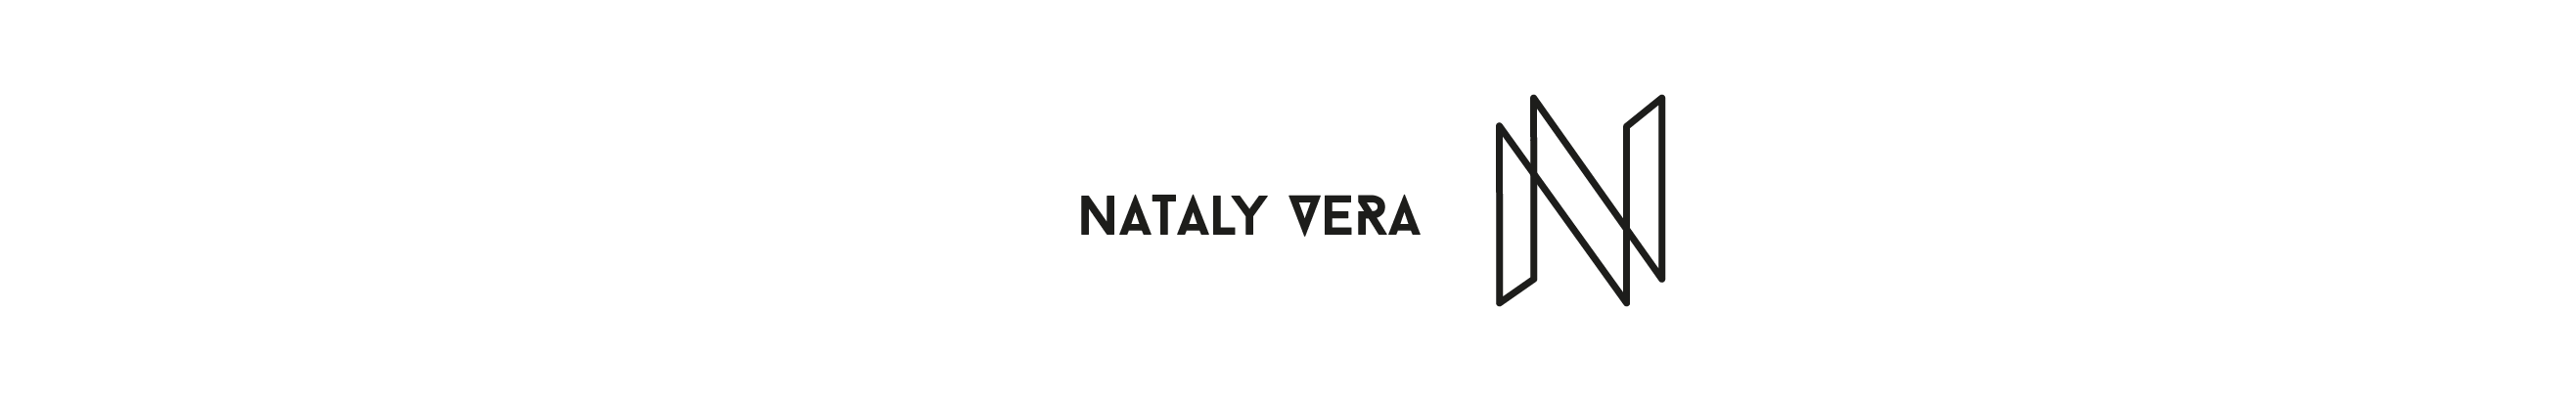 Nataly Vera Tapia のプロファイルバナー